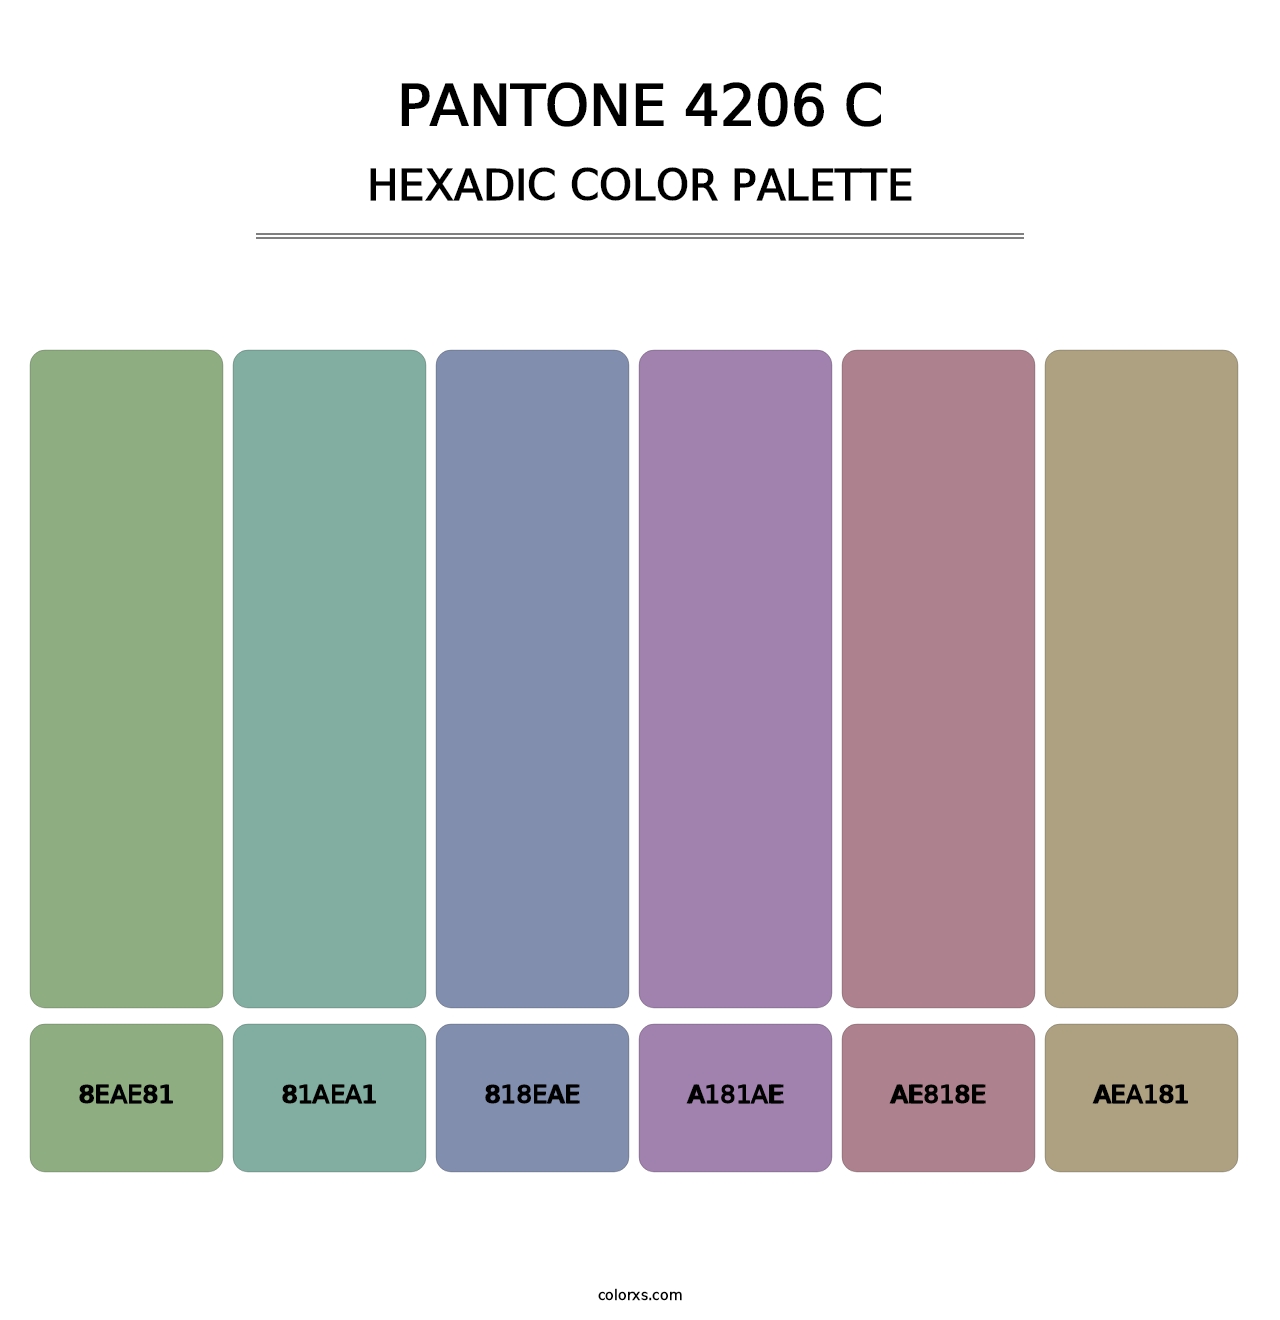 PANTONE 4206 C - Hexadic Color Palette